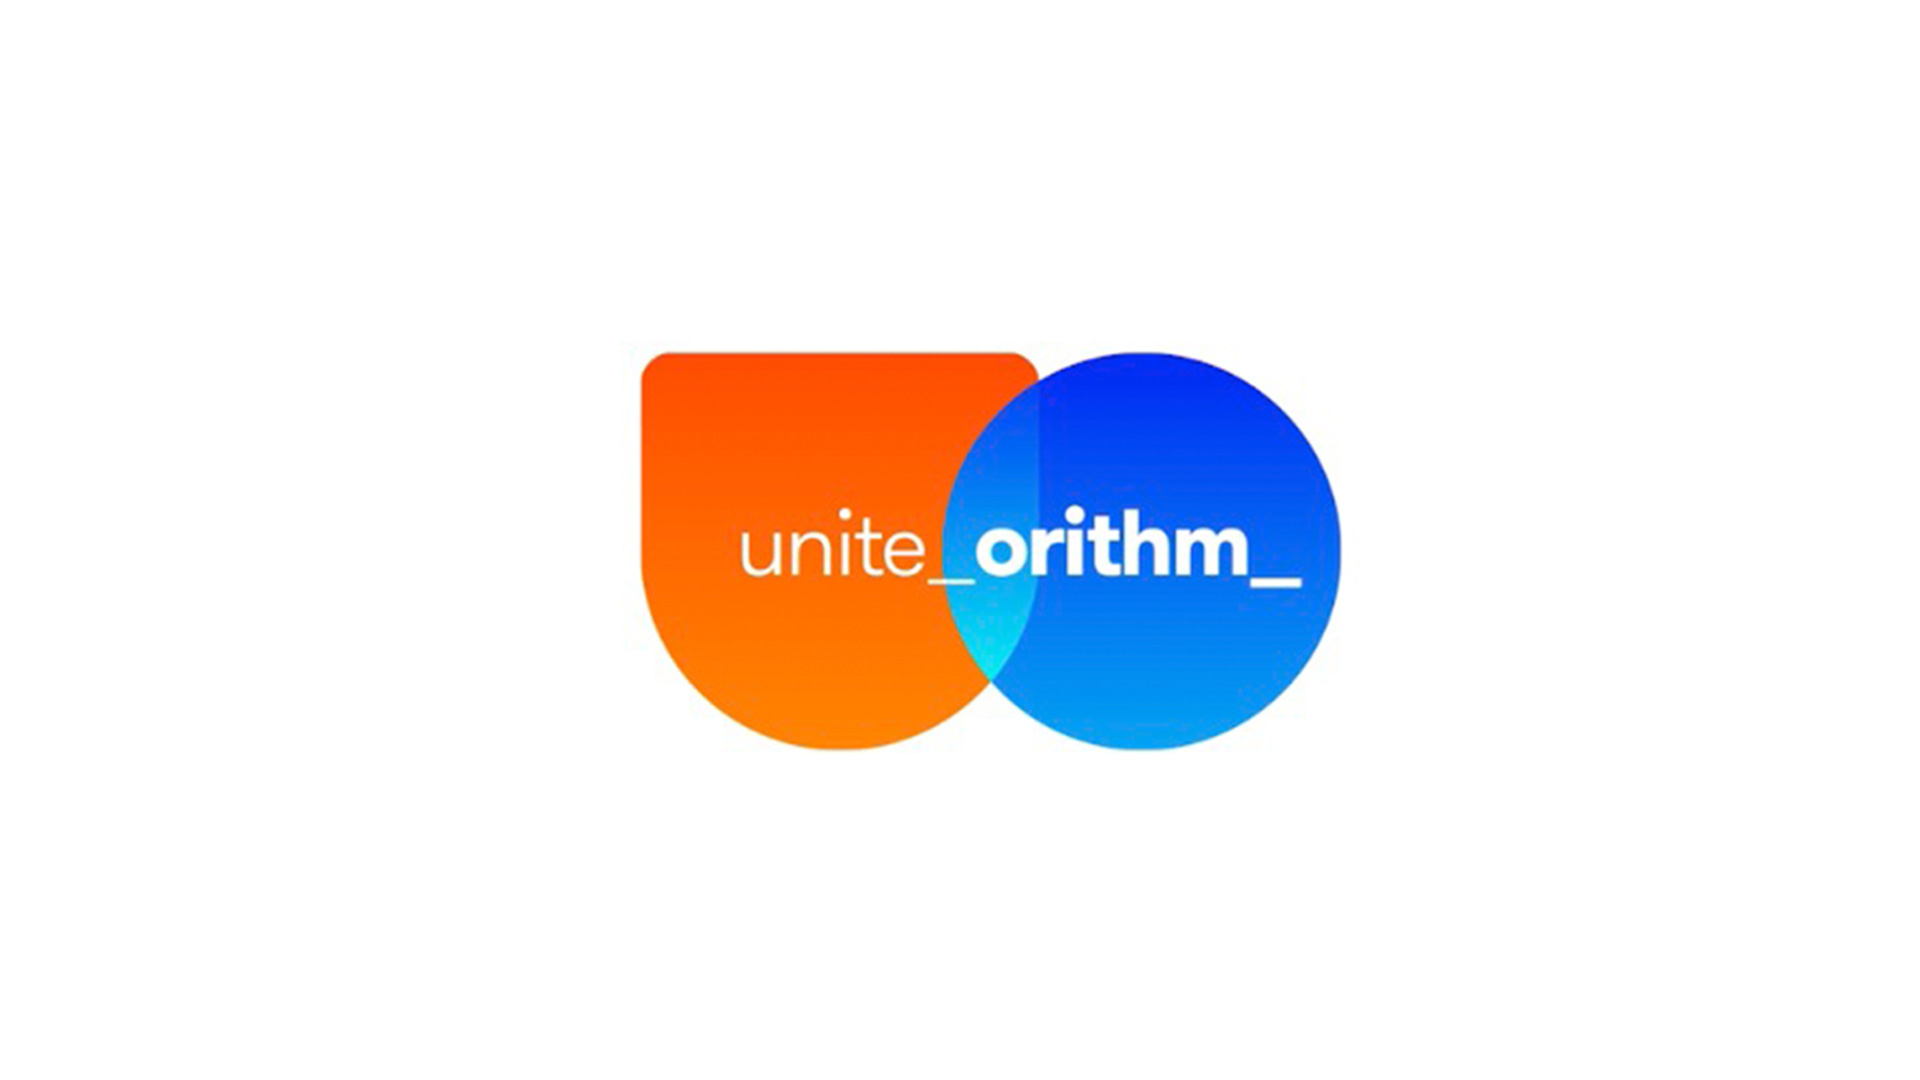 Unite_orithm